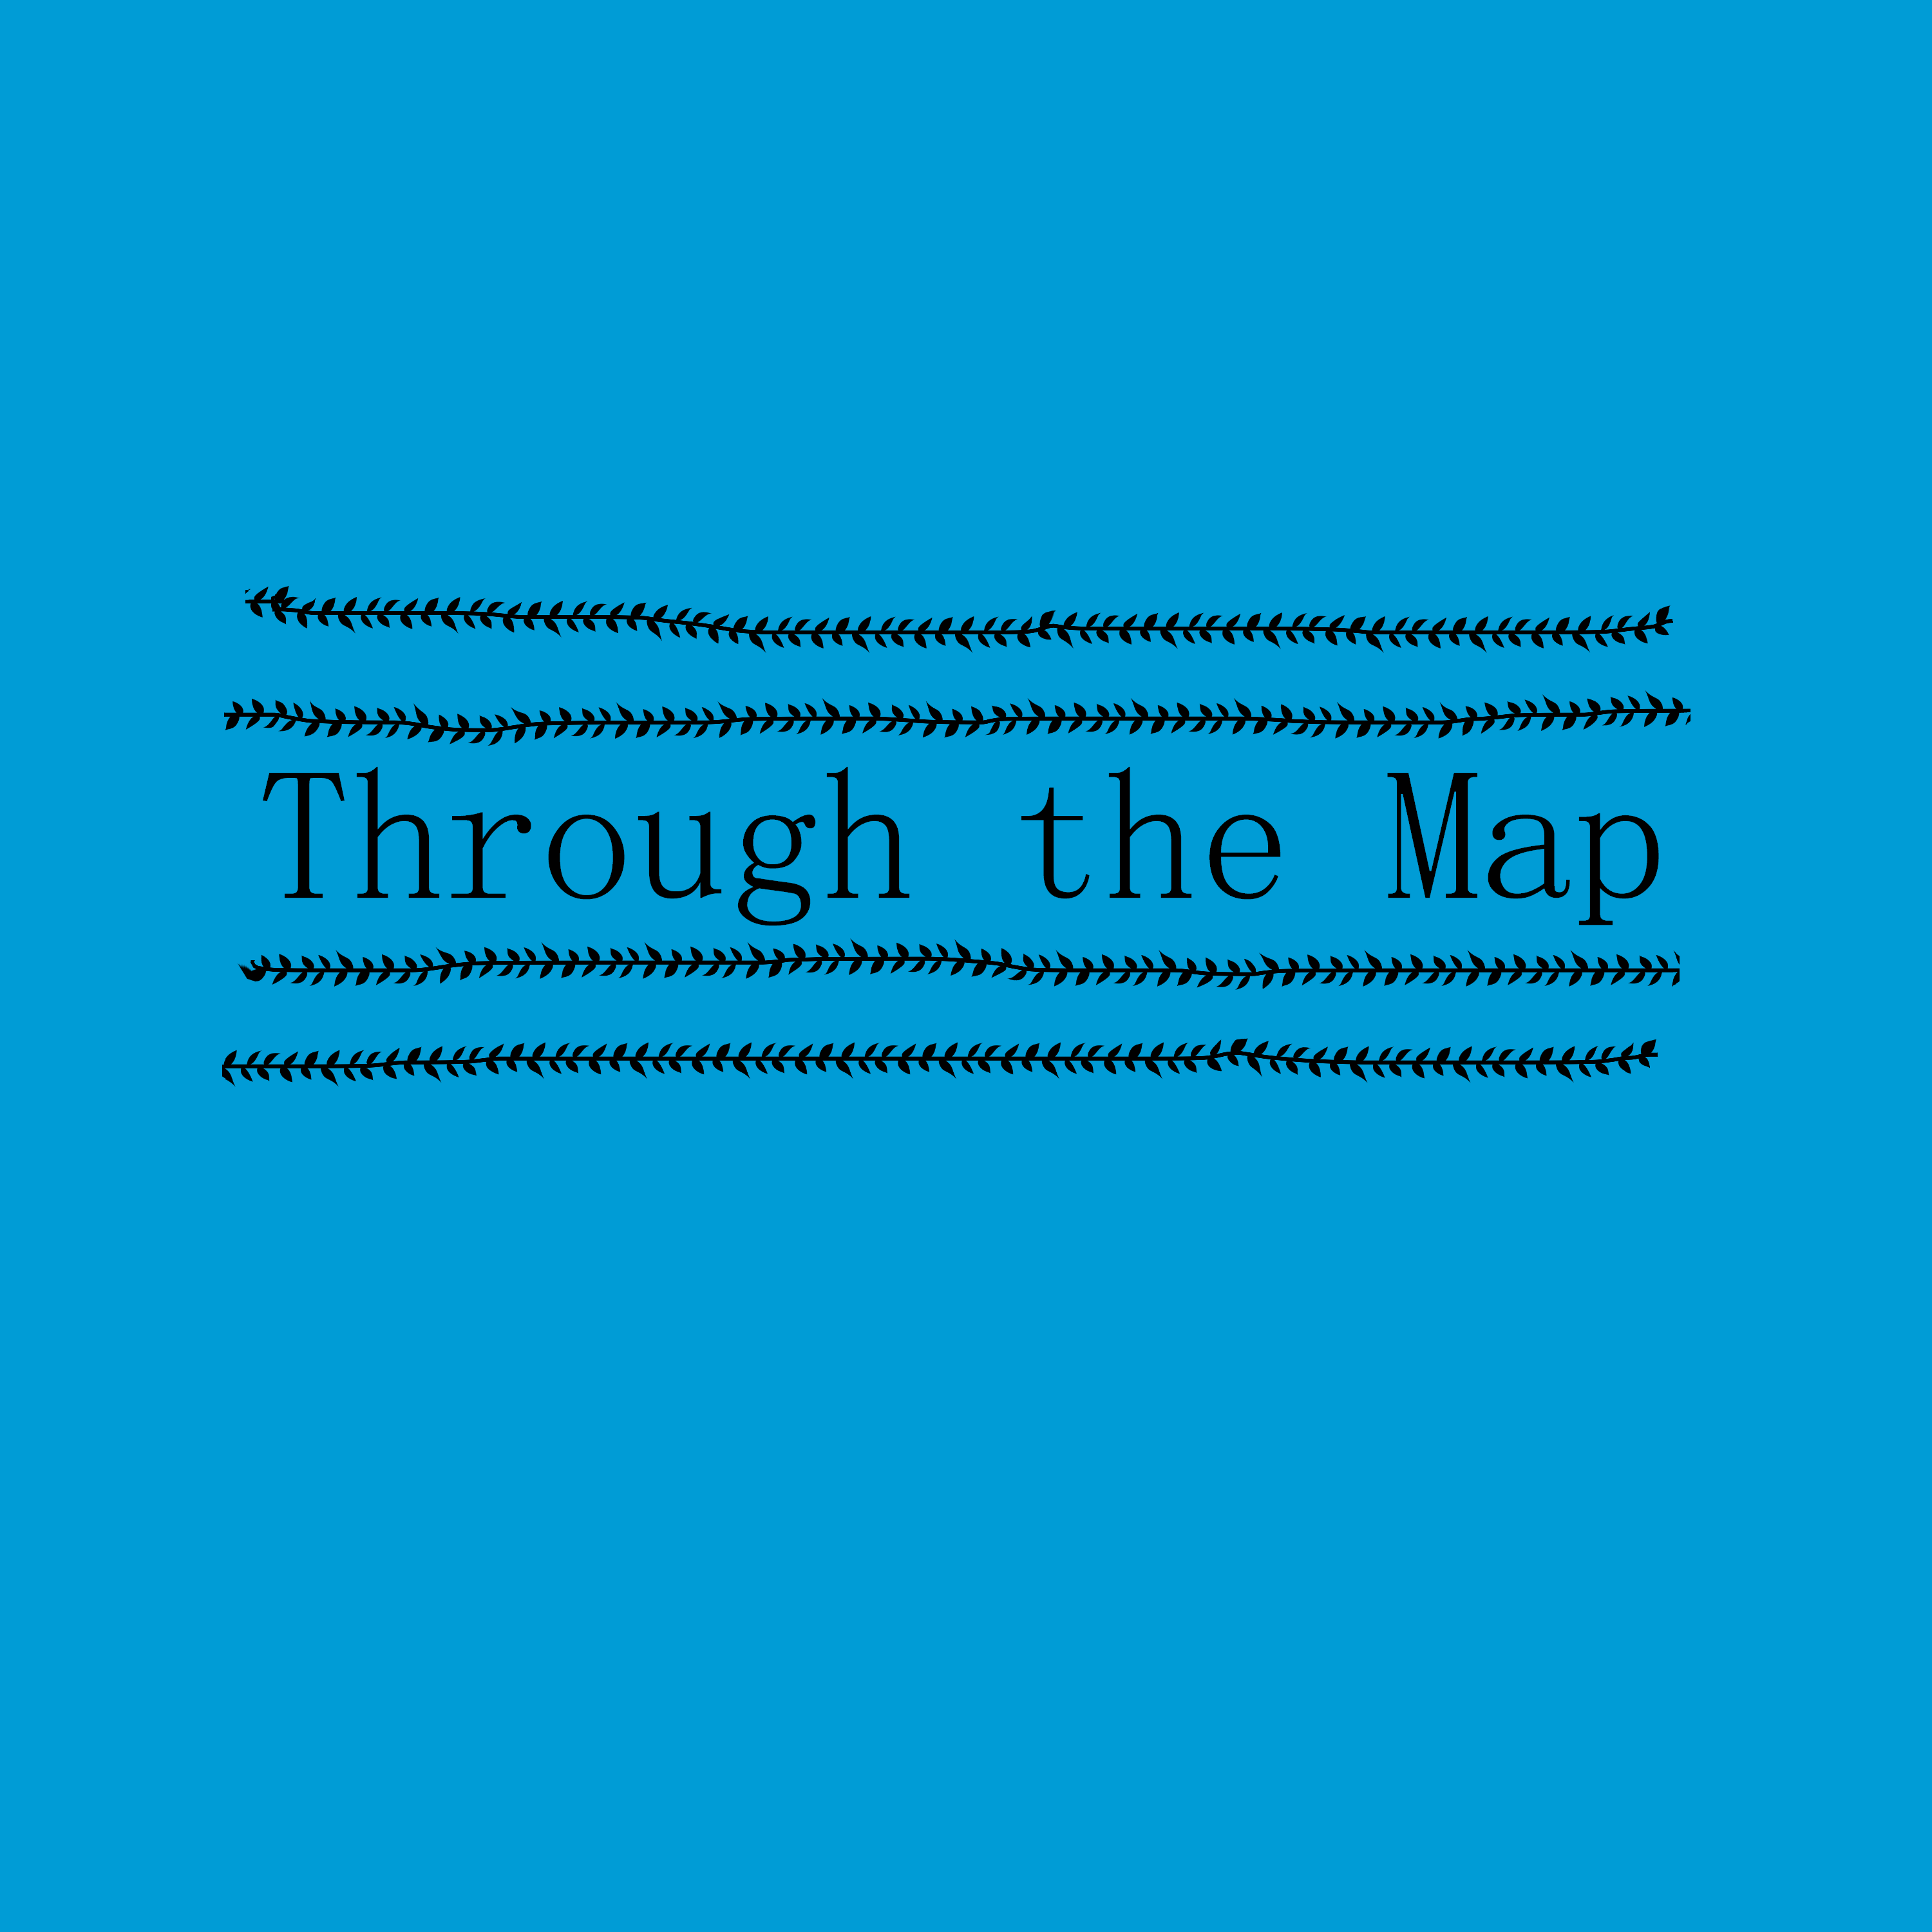 Through the Map